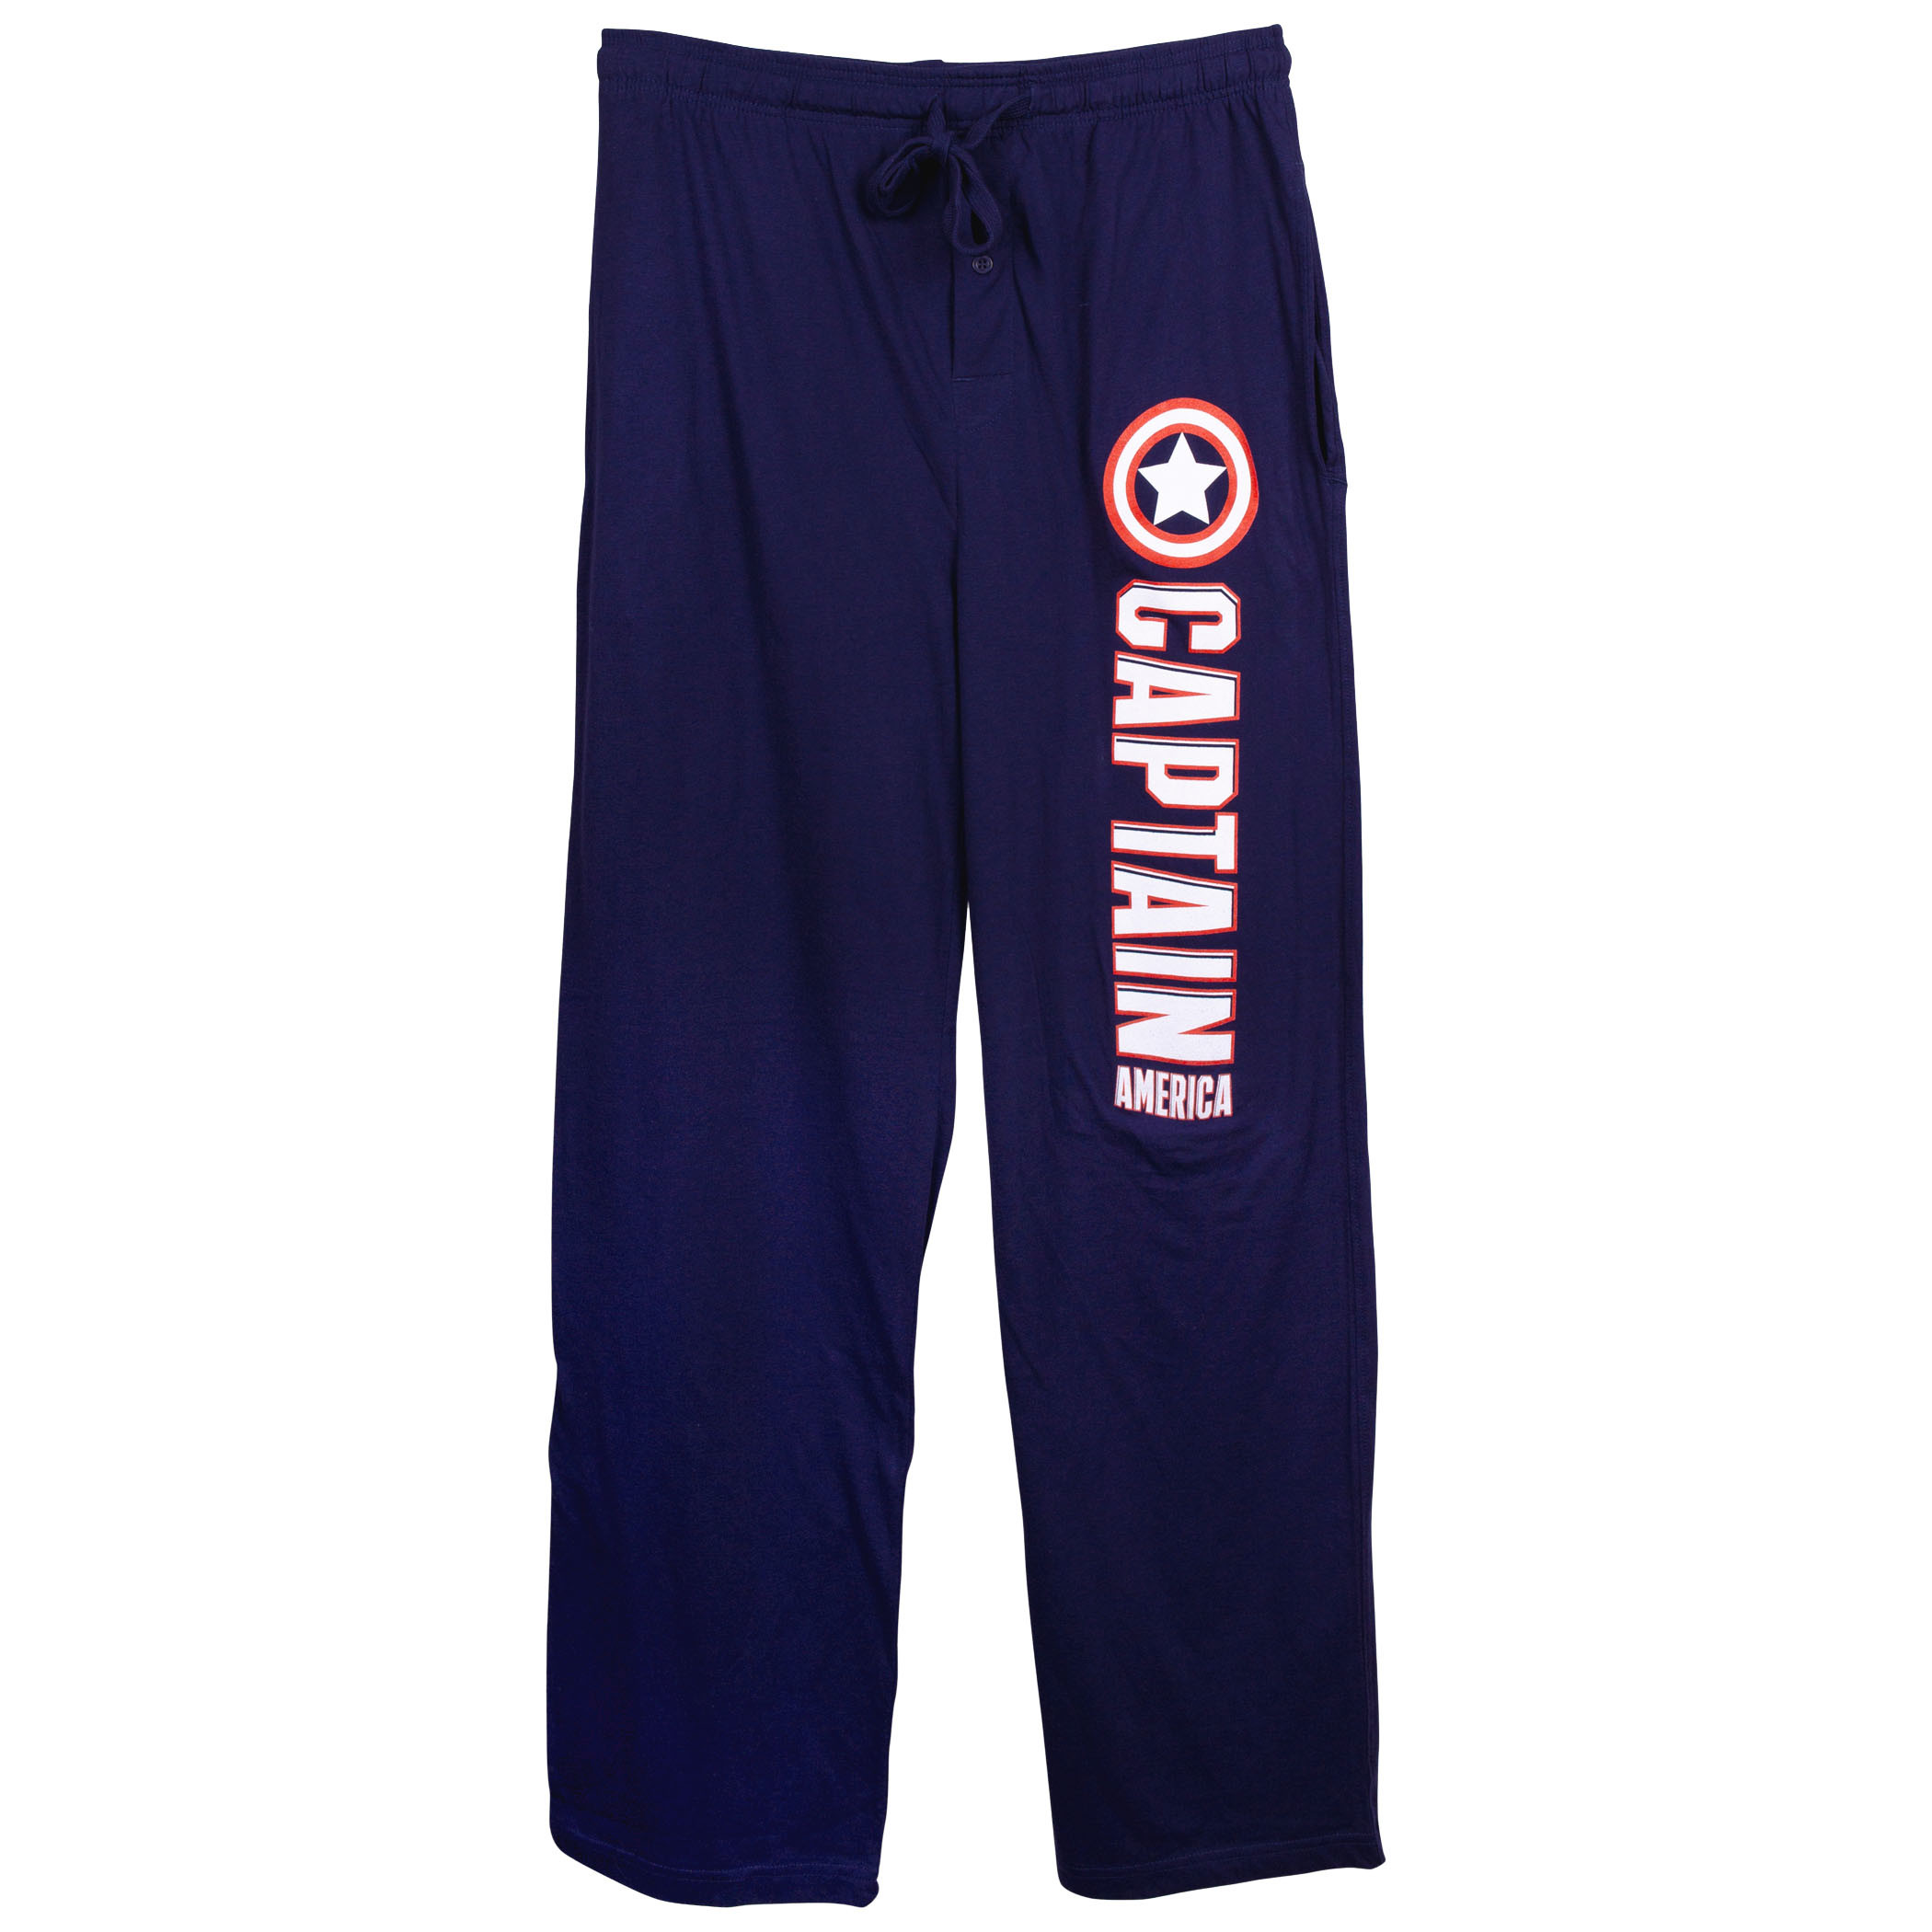 Captain America Unisex Pajama Pants